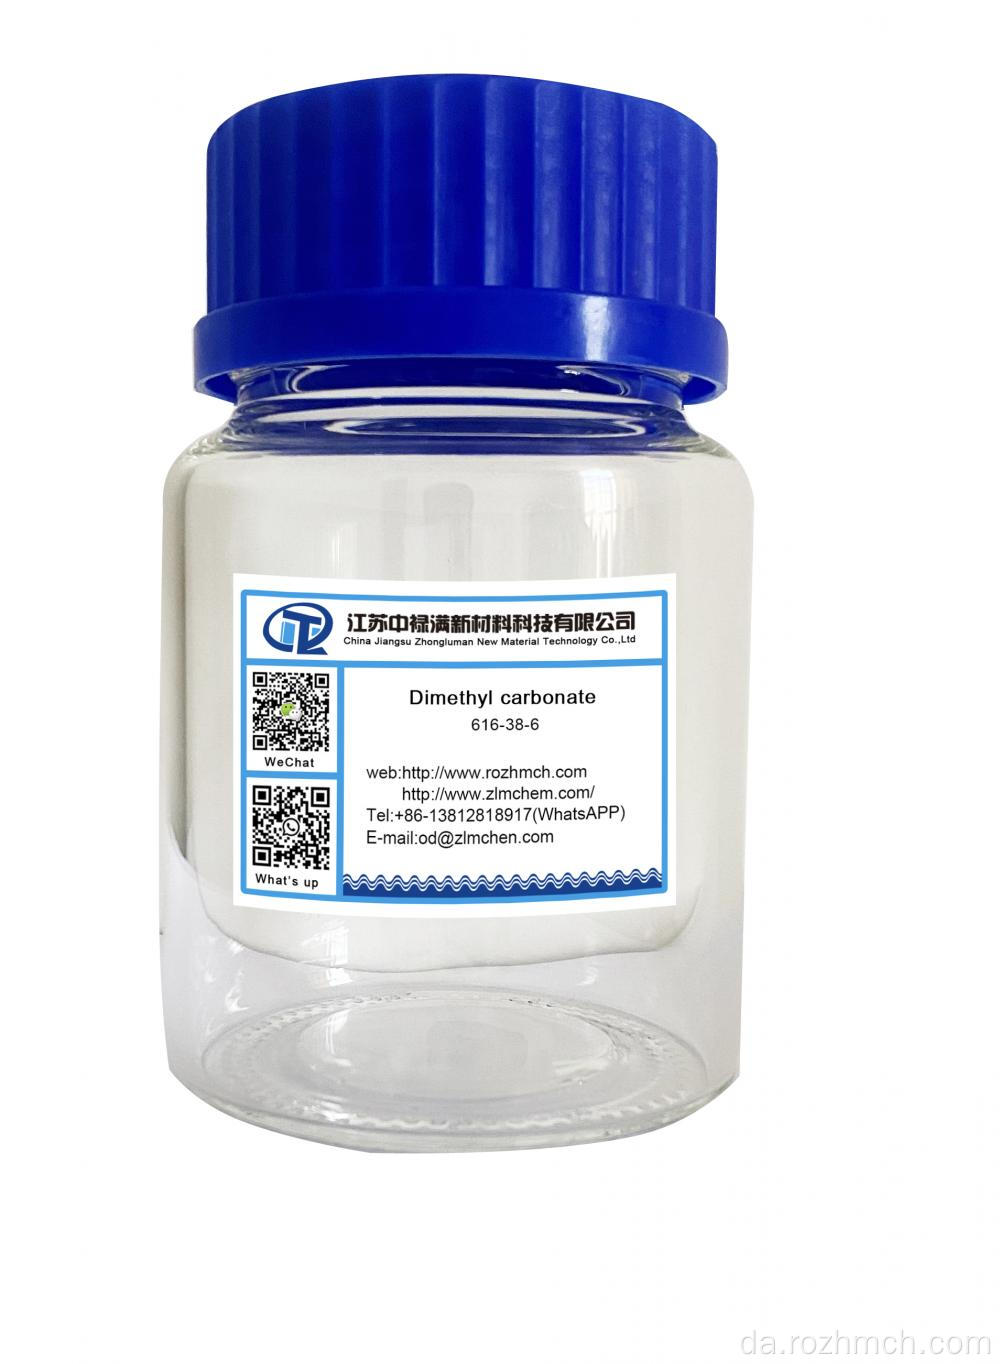 Dimethylcarbonat DMC CAS nr. 616-38-6